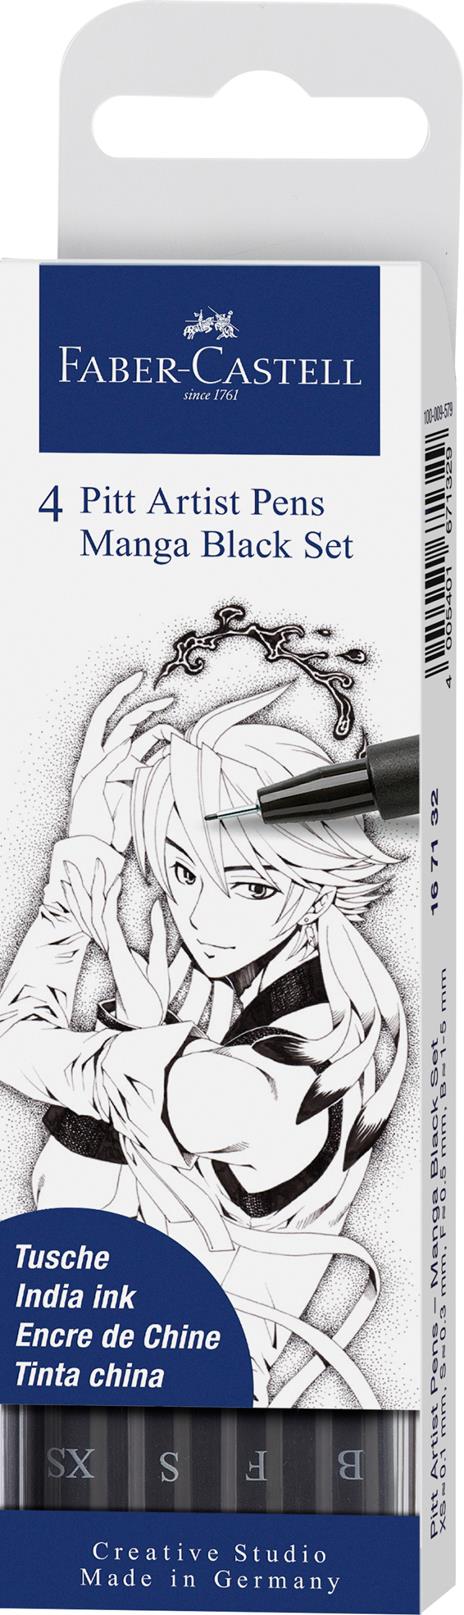 Bustina da 4 Pitt Artist Pen-Manga Nero nei tratti XS-S-F-B - 2